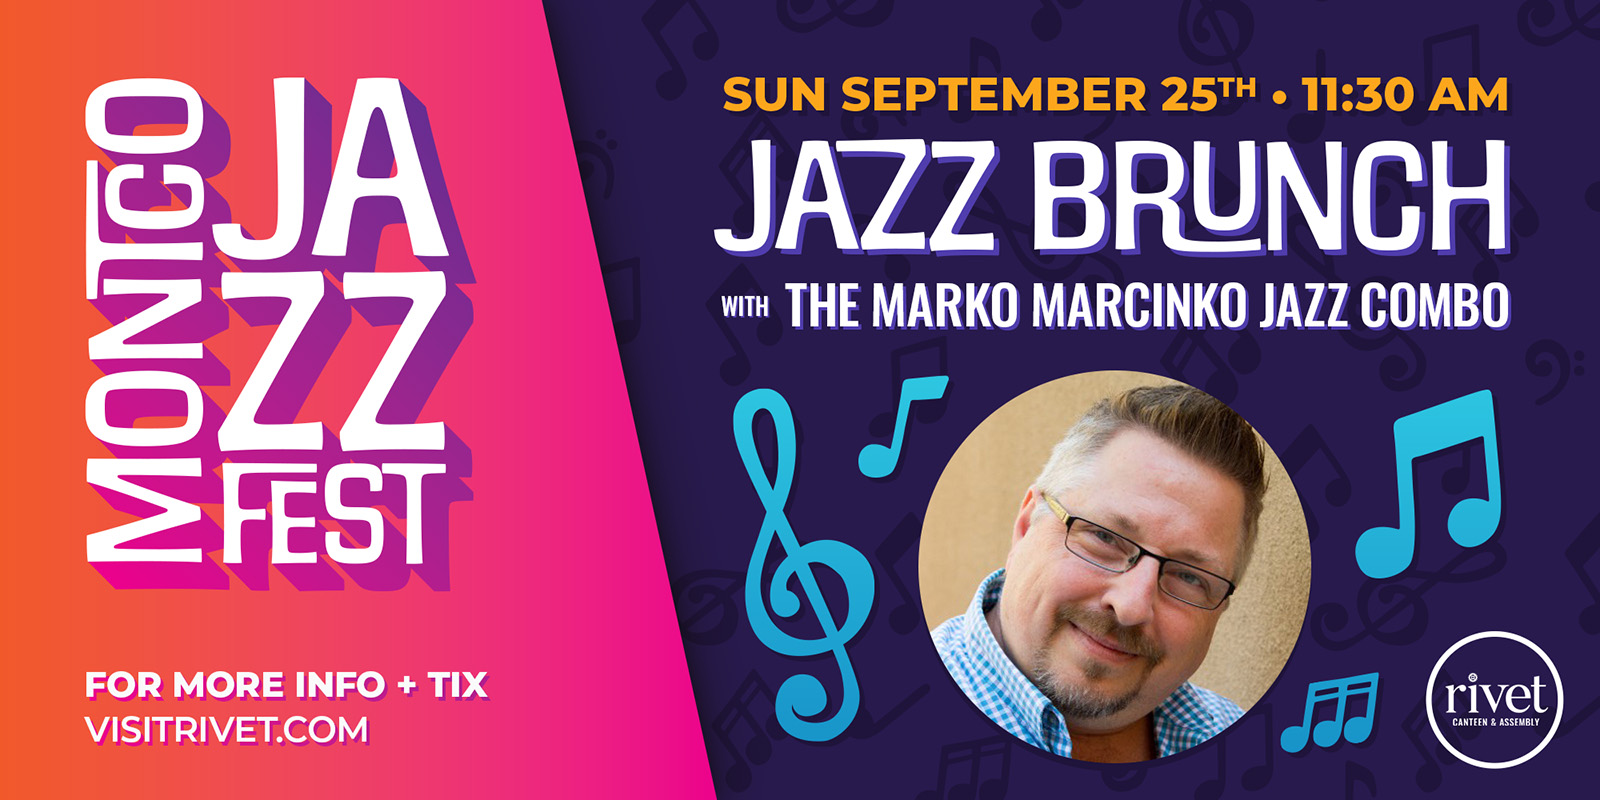 Jazz Brunch with The Marko Marcinko Jazz Combo at Rivet on Sunday, September 25th, 2022.